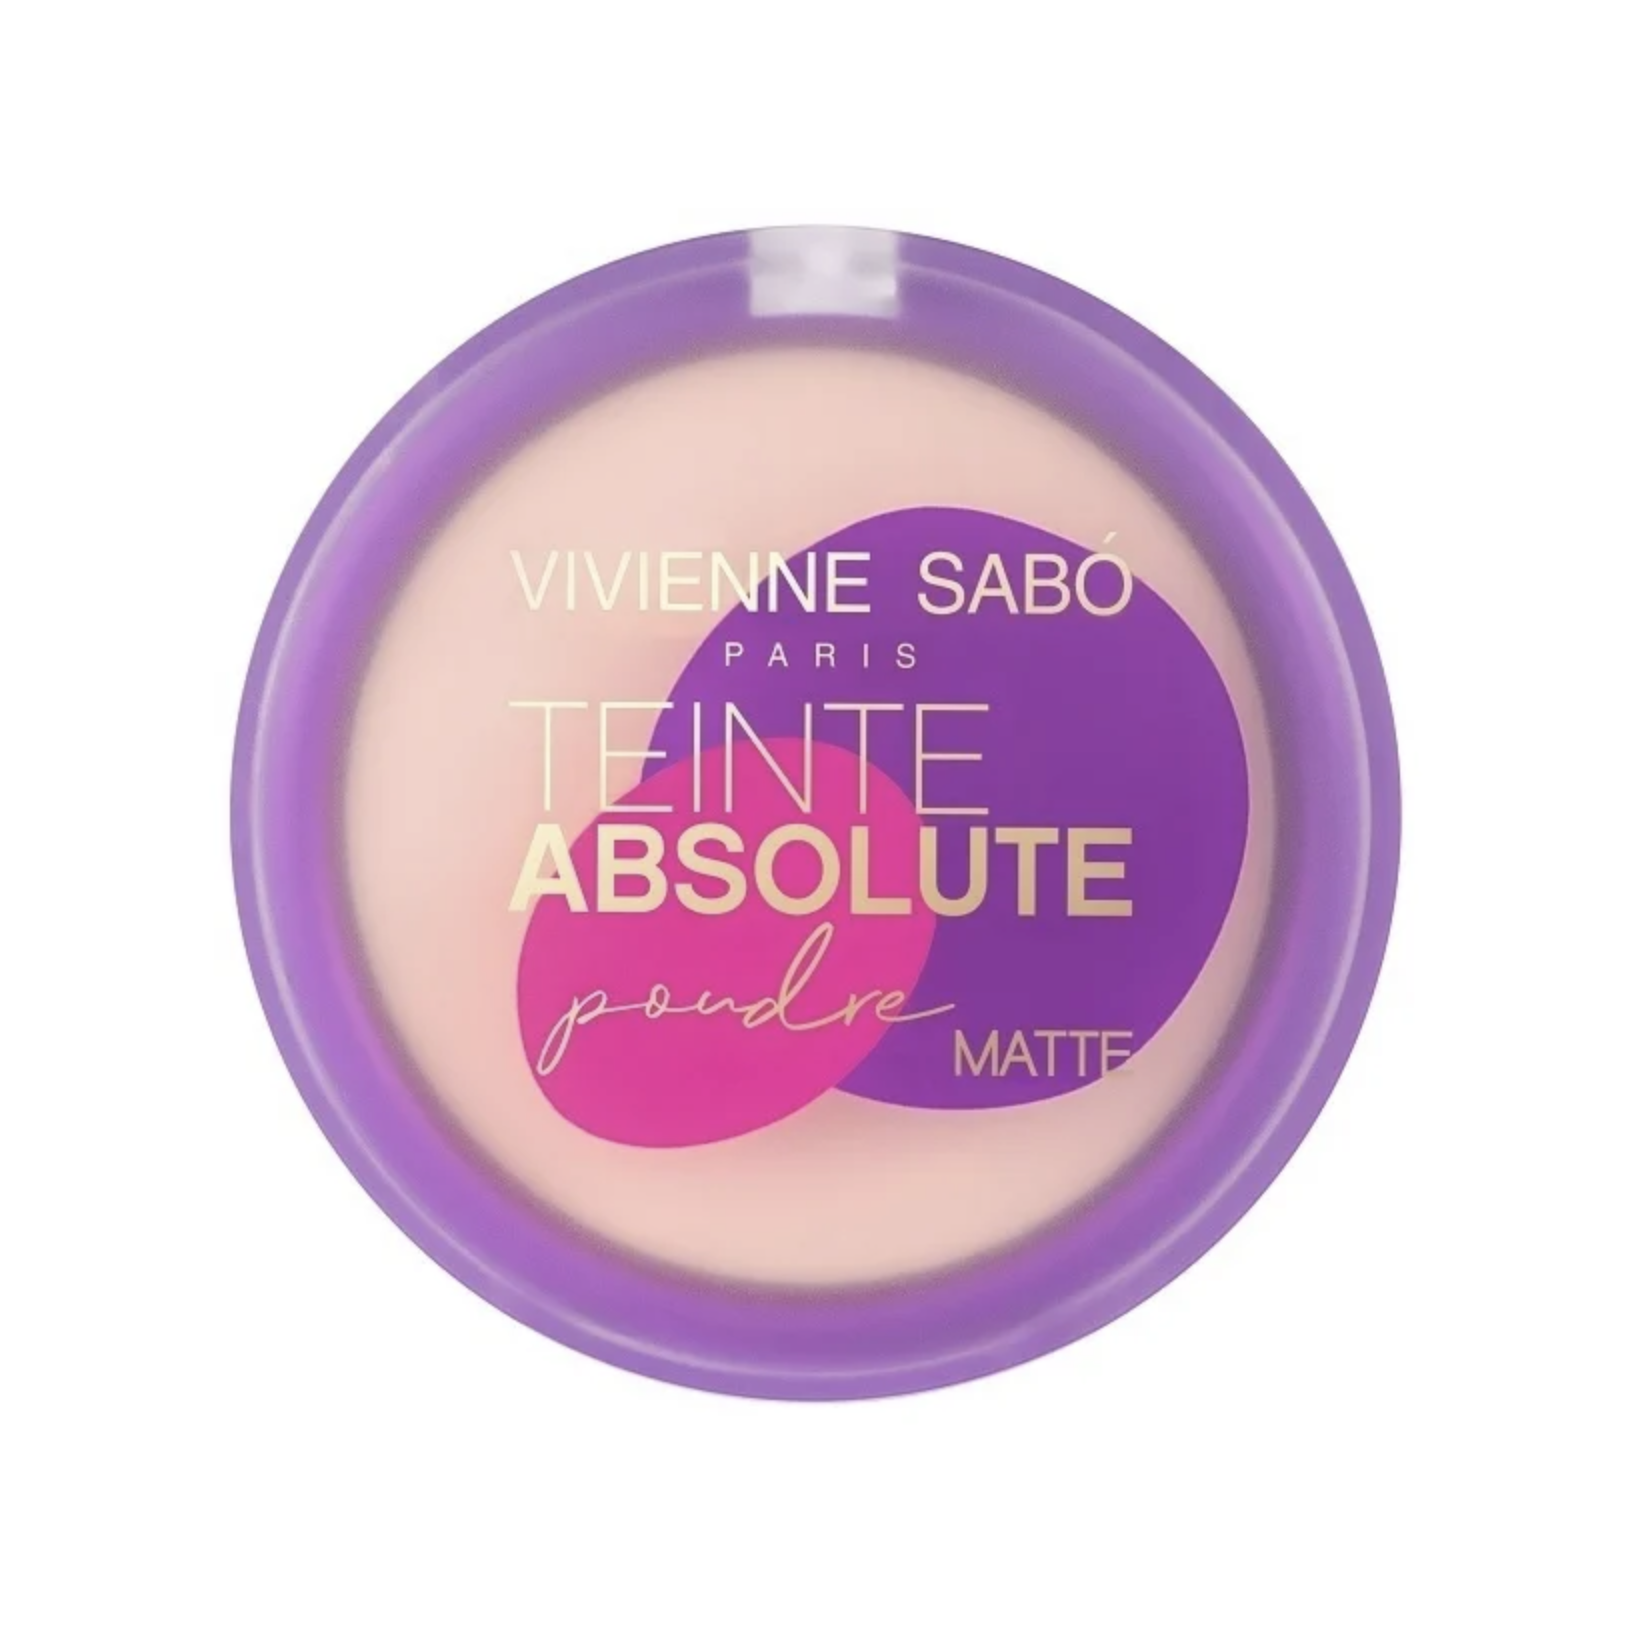    / Vivienne Sabo -     Teinte Absolute Poudre Matte  01, 6 